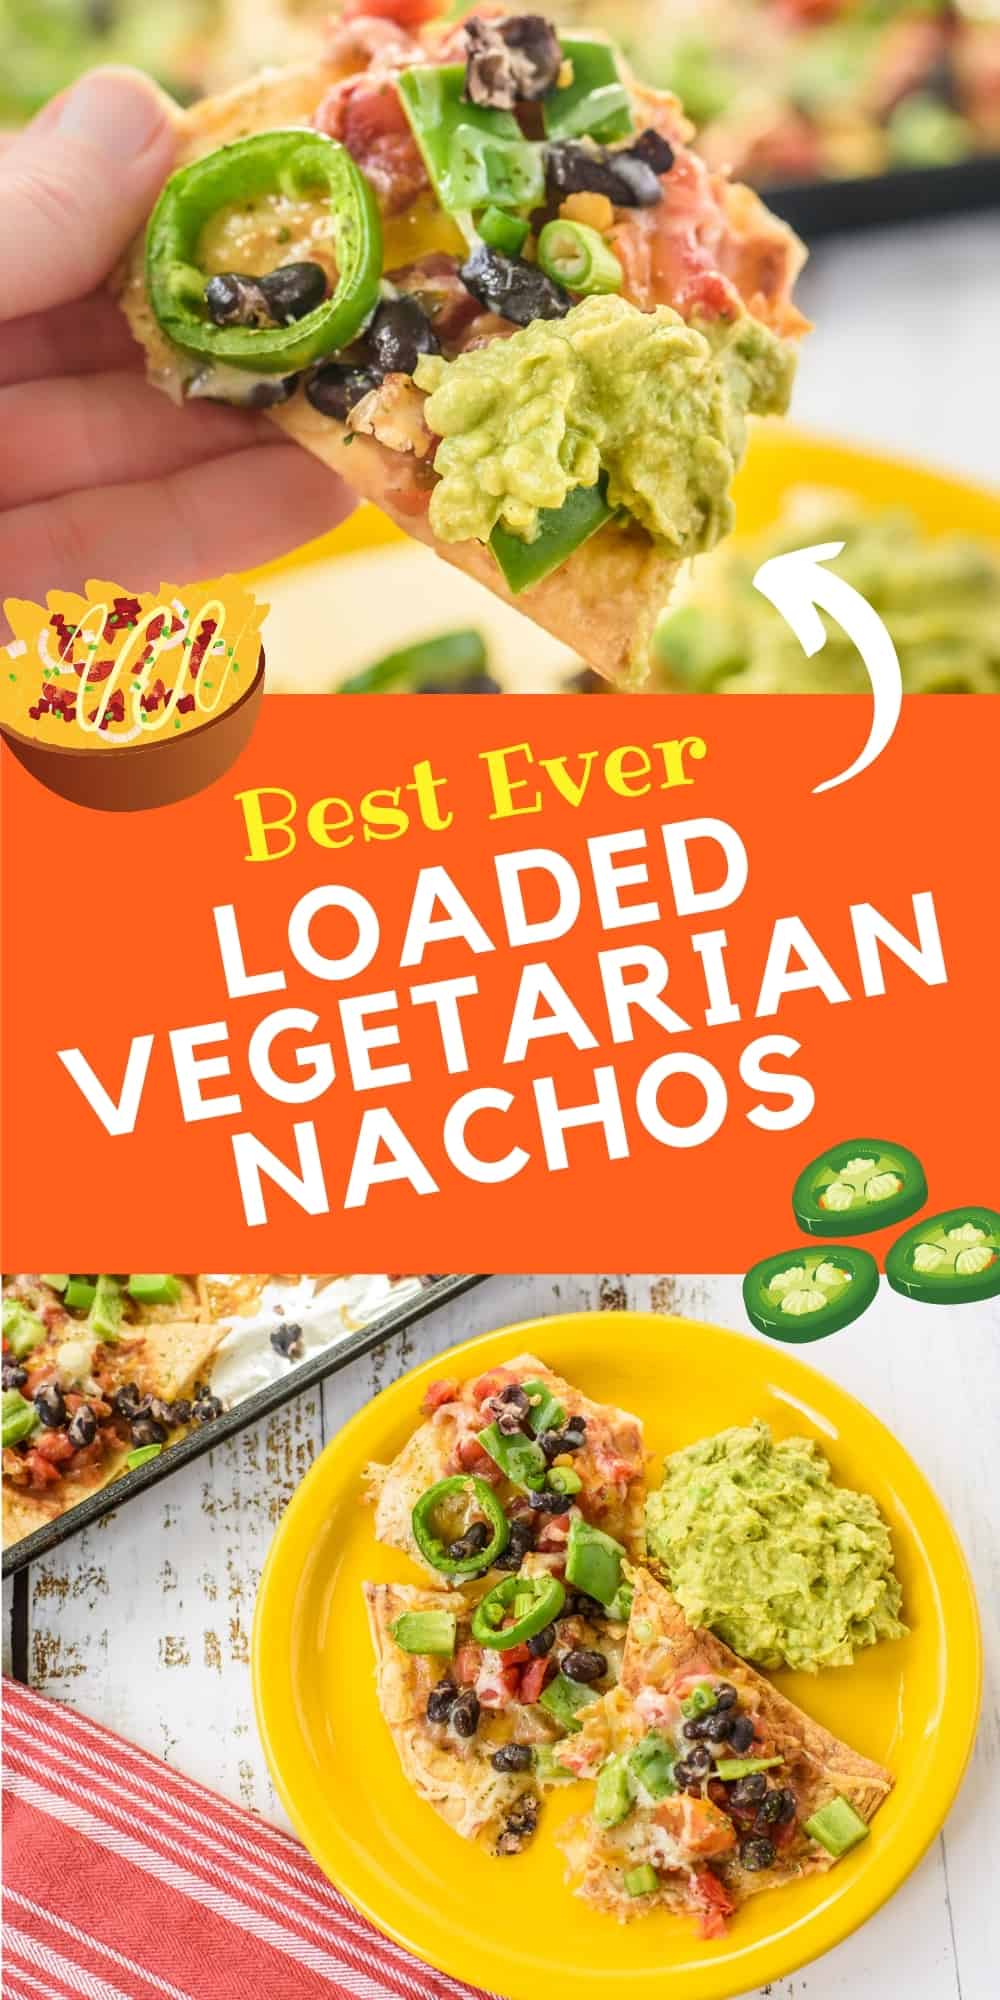 Best Ever Loaded Vegetarian Nachos